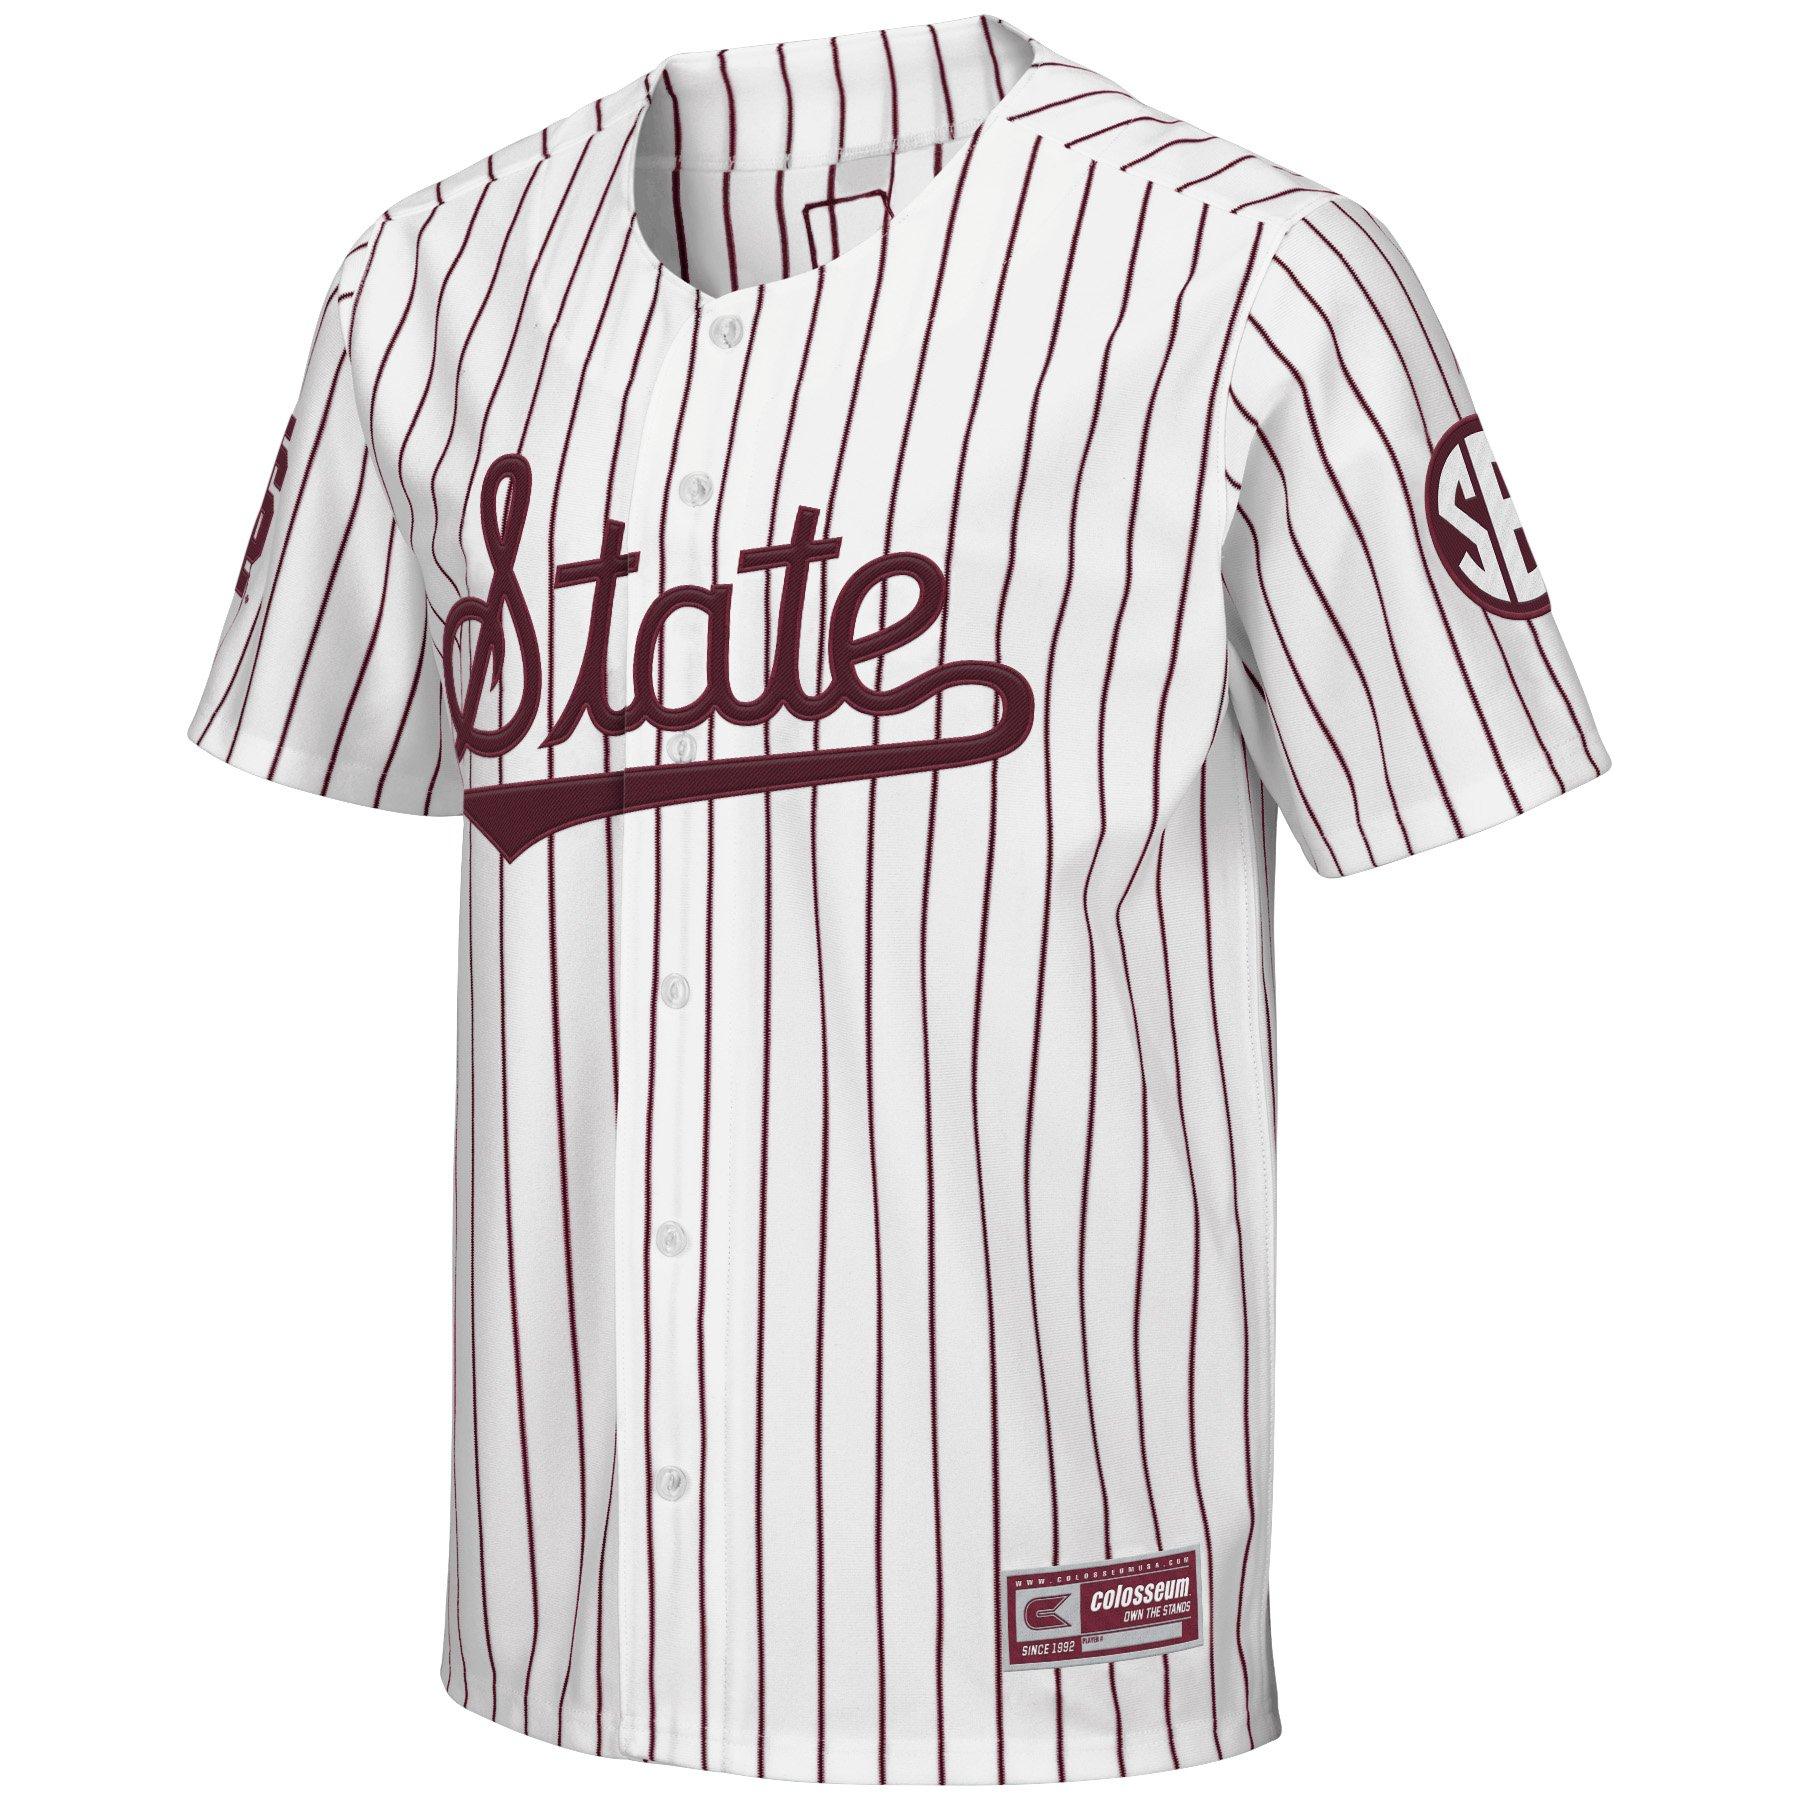 mississippi state baseball jersey